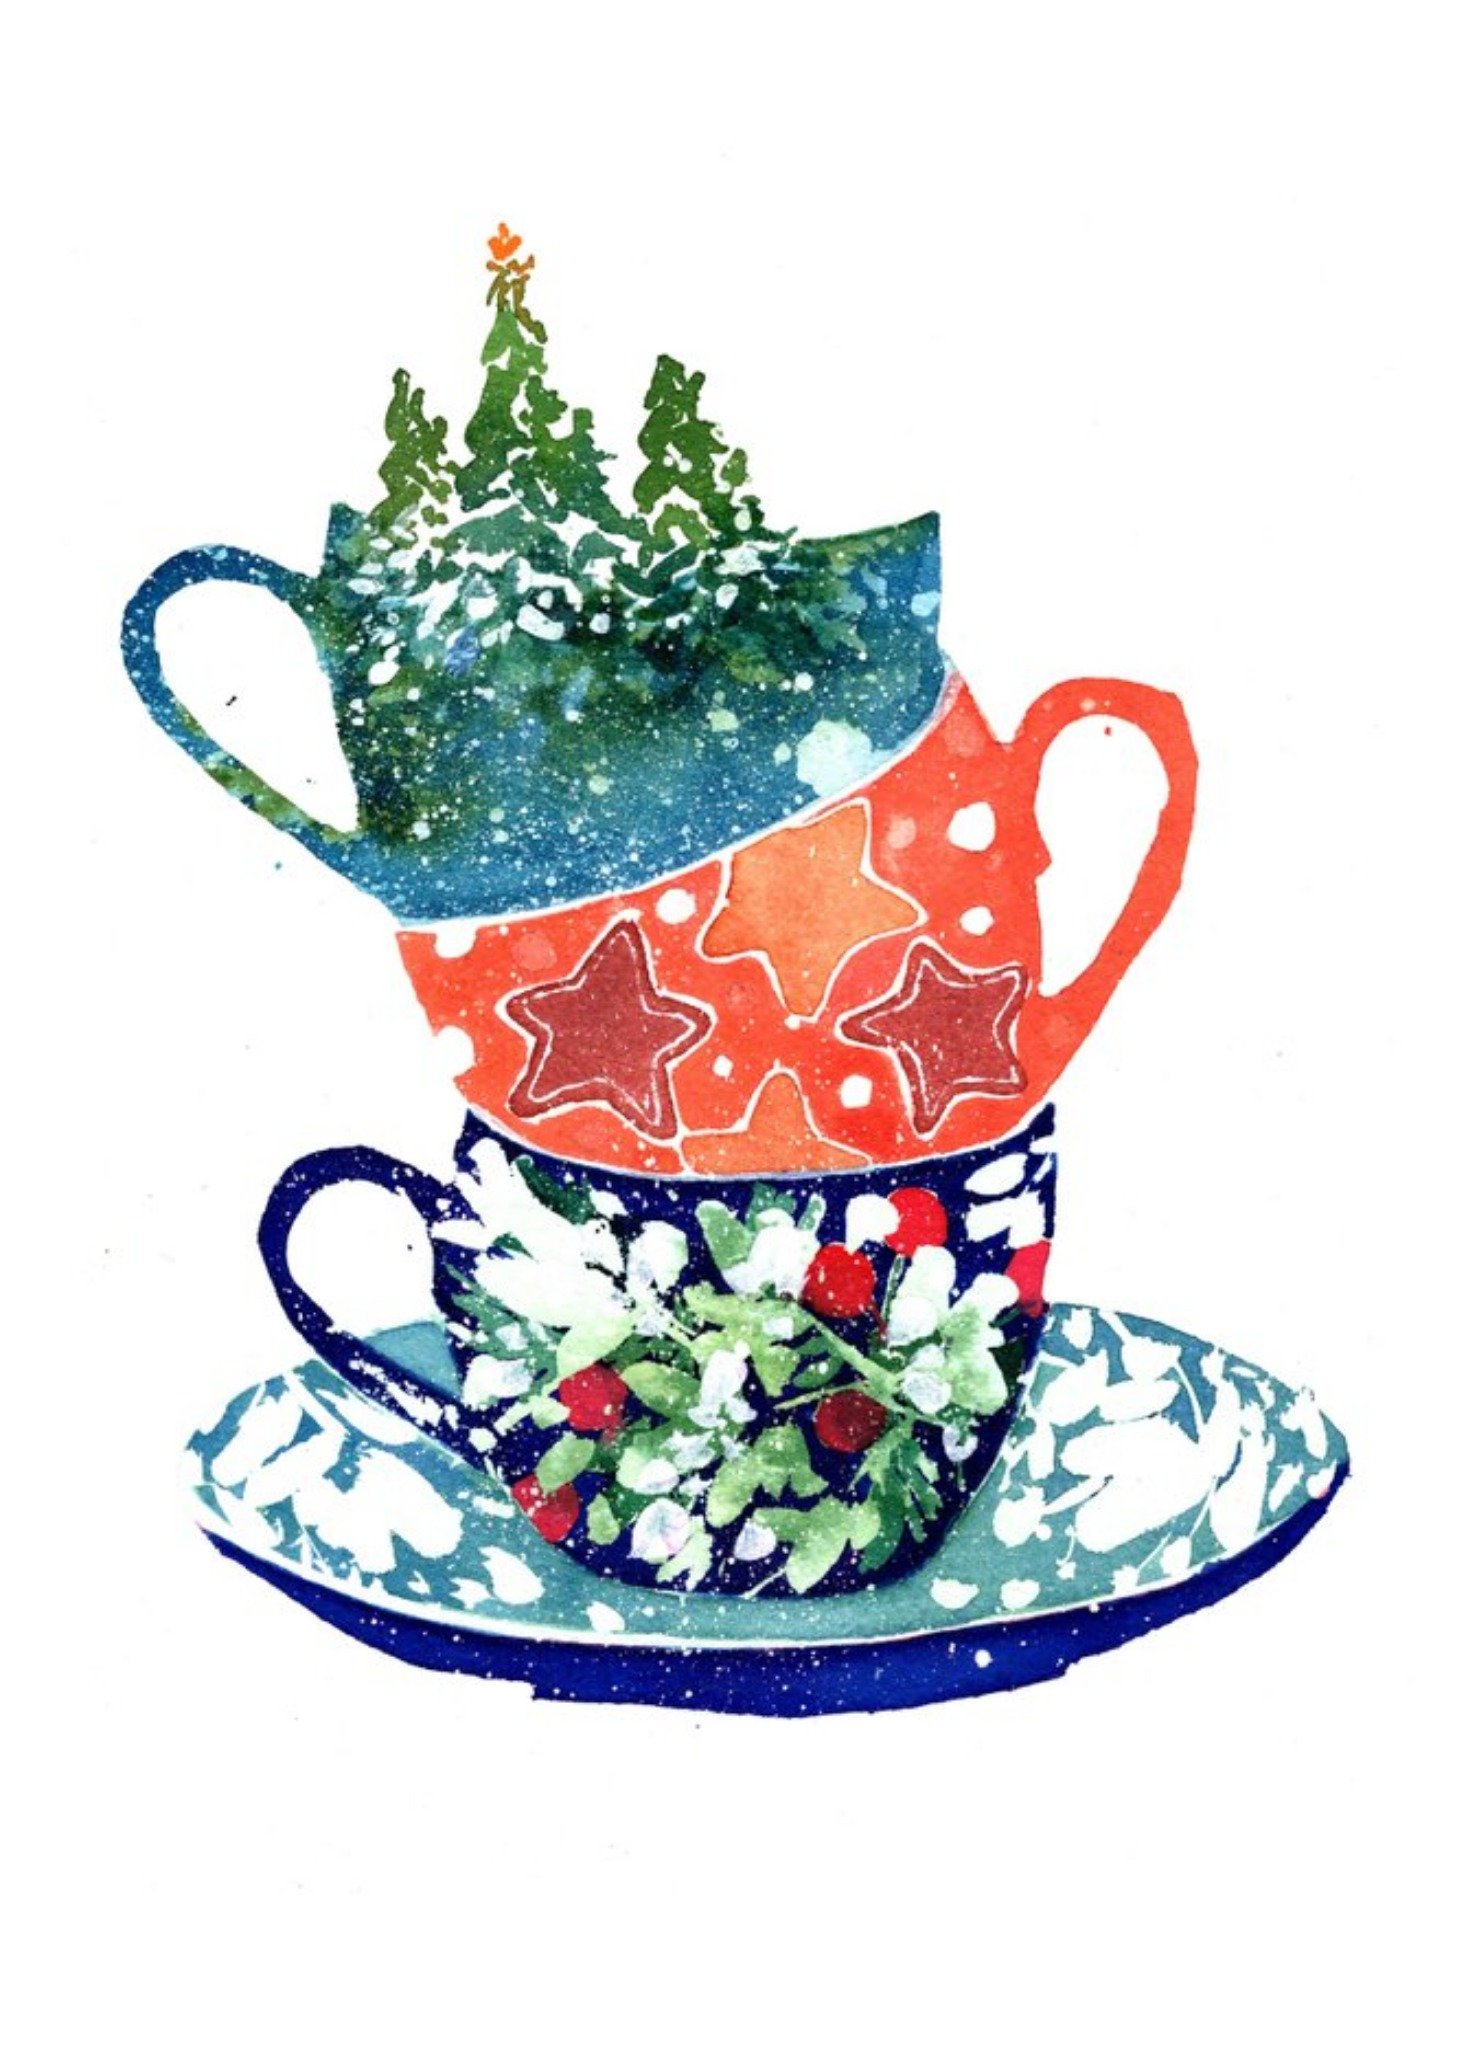 Moonpig Festive Teacups Watercolour Illustration Christmas Card, Large